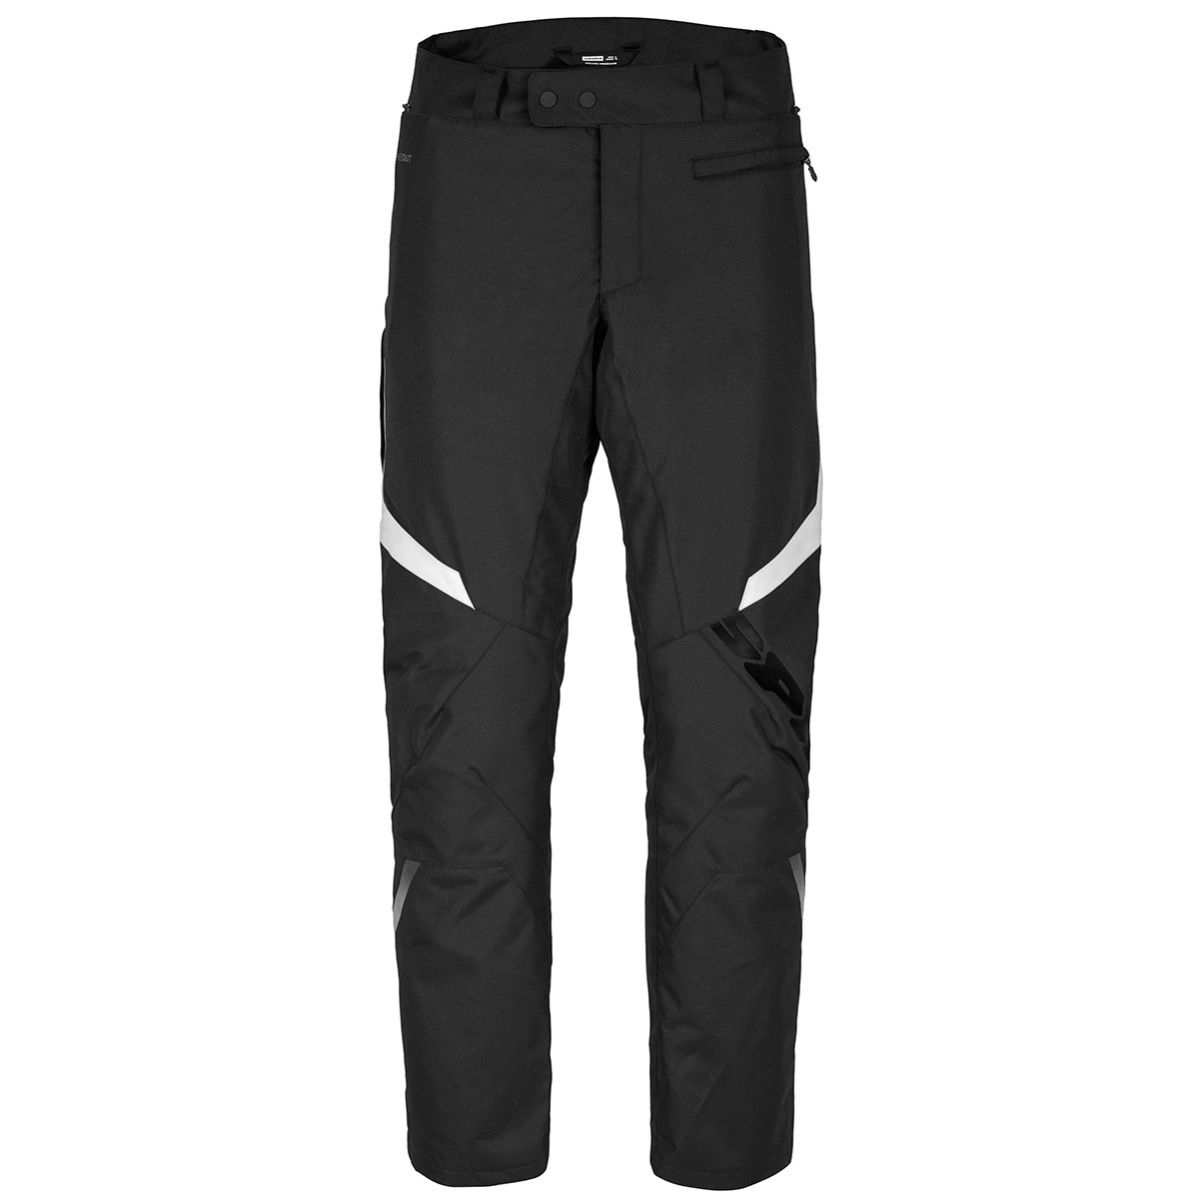 Image of Spidi Sportmaster Pants Black White Size 5XL ID 8030161478181